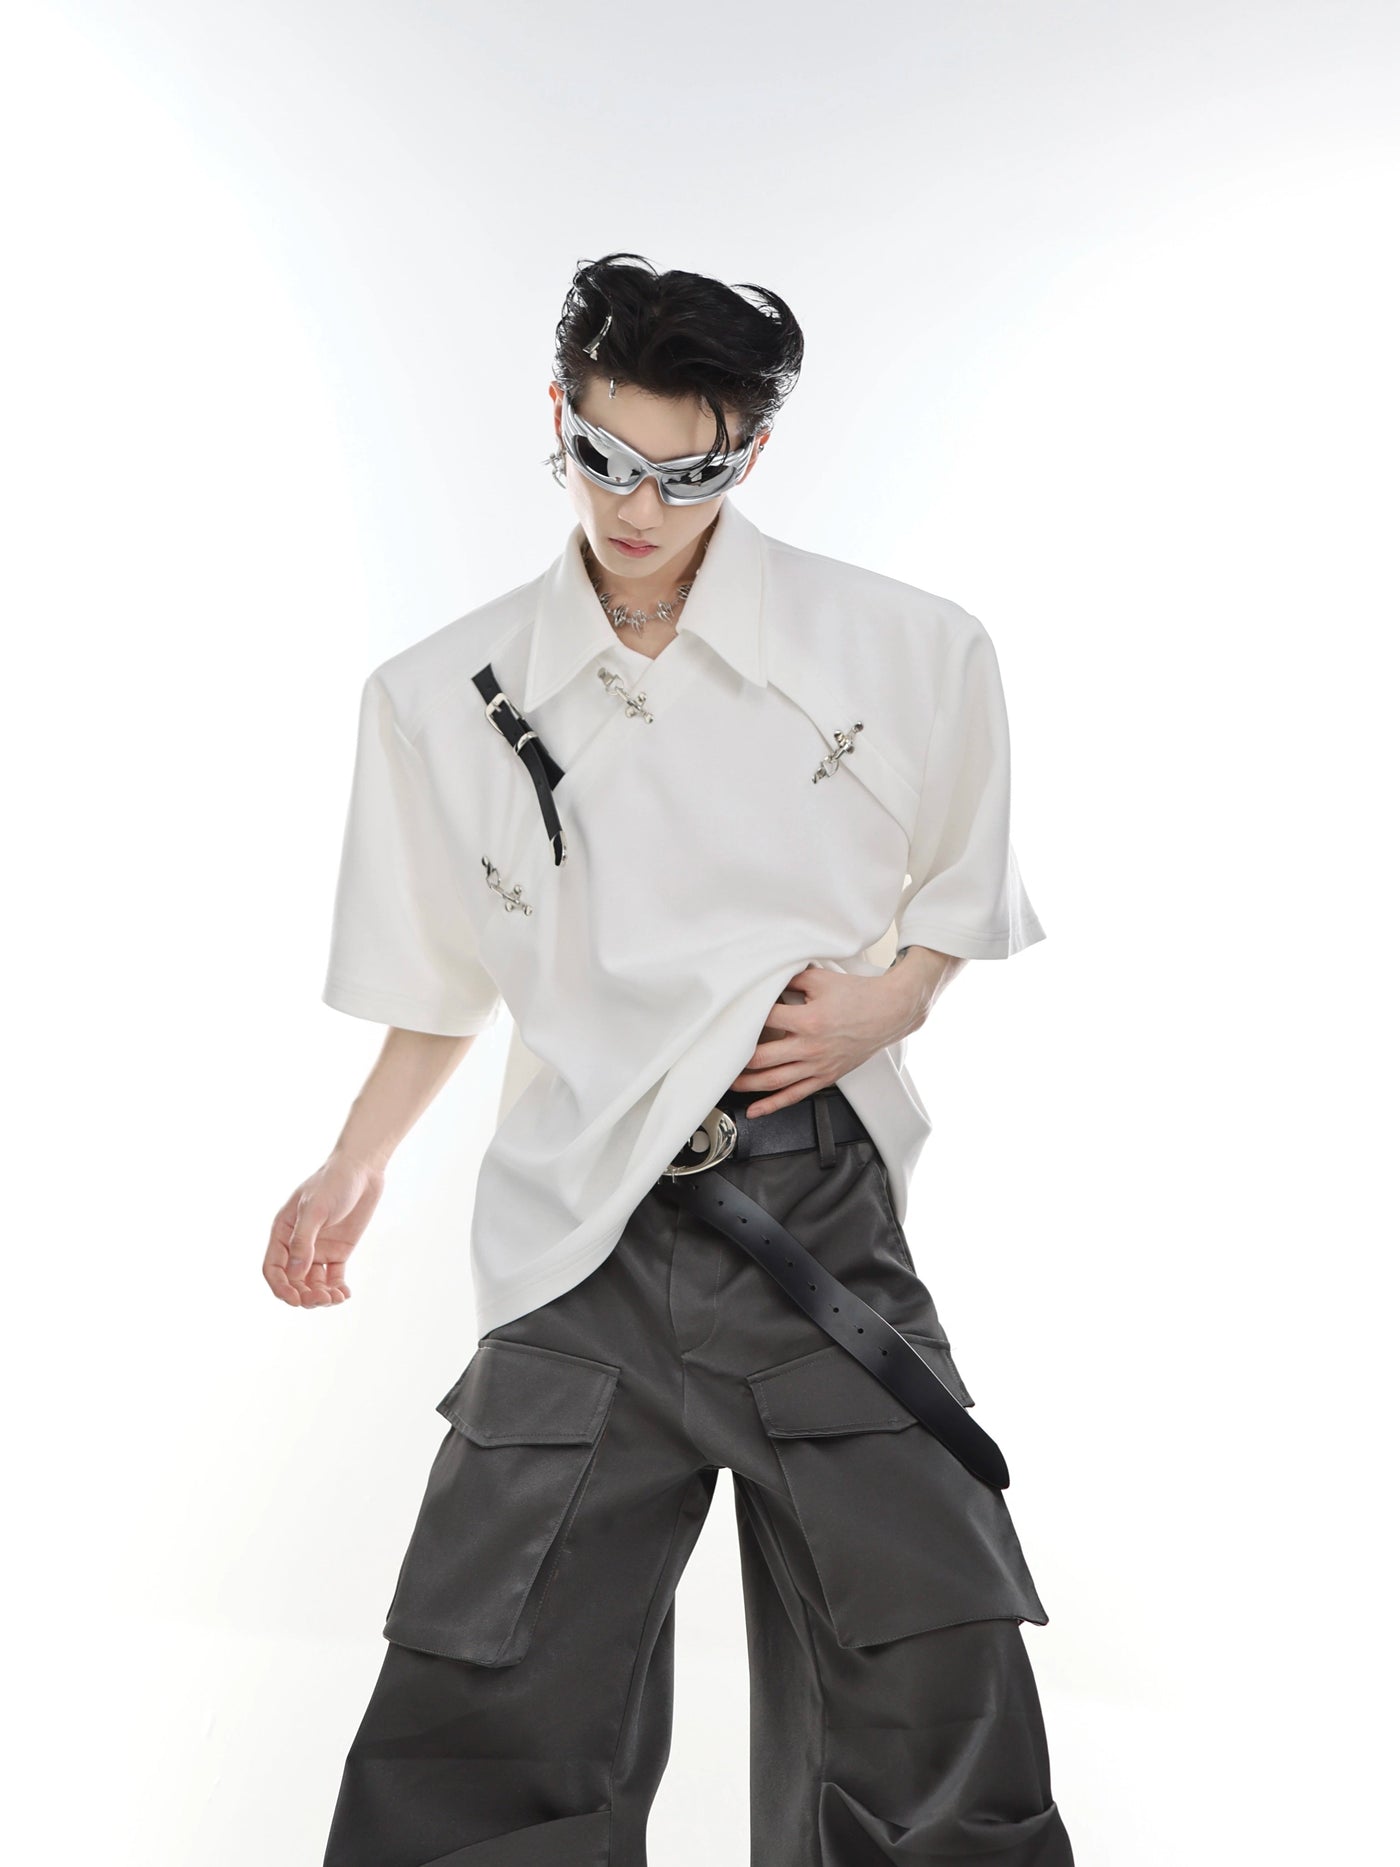 Strap Belt and Metal Link Shirt Korean Street Fashion Shirt By Argue Culture Shop Online at OH Vault